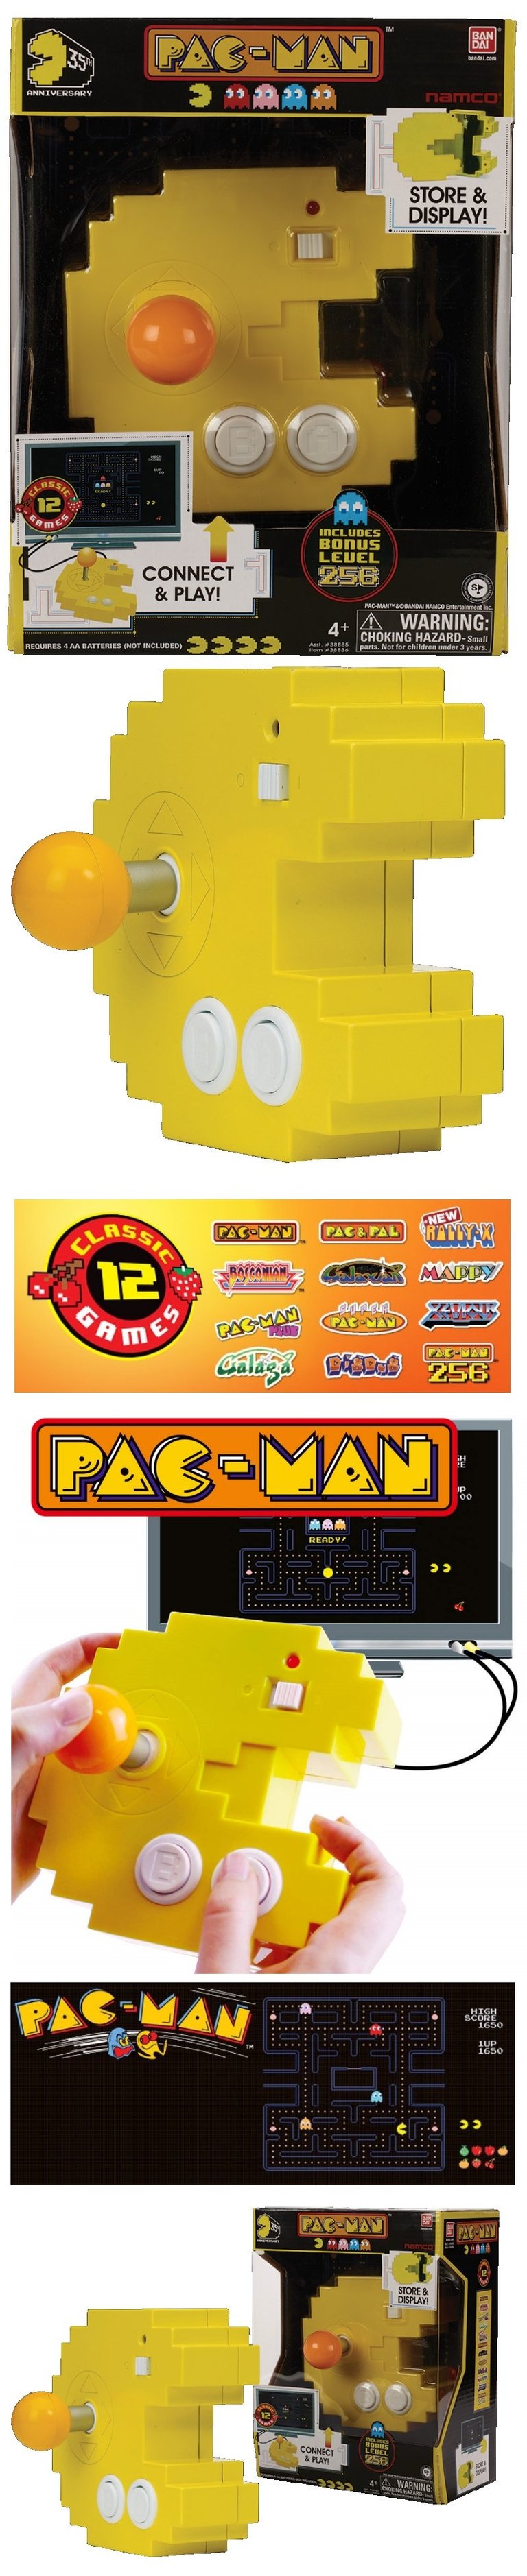 Pacman-PIC.jpg